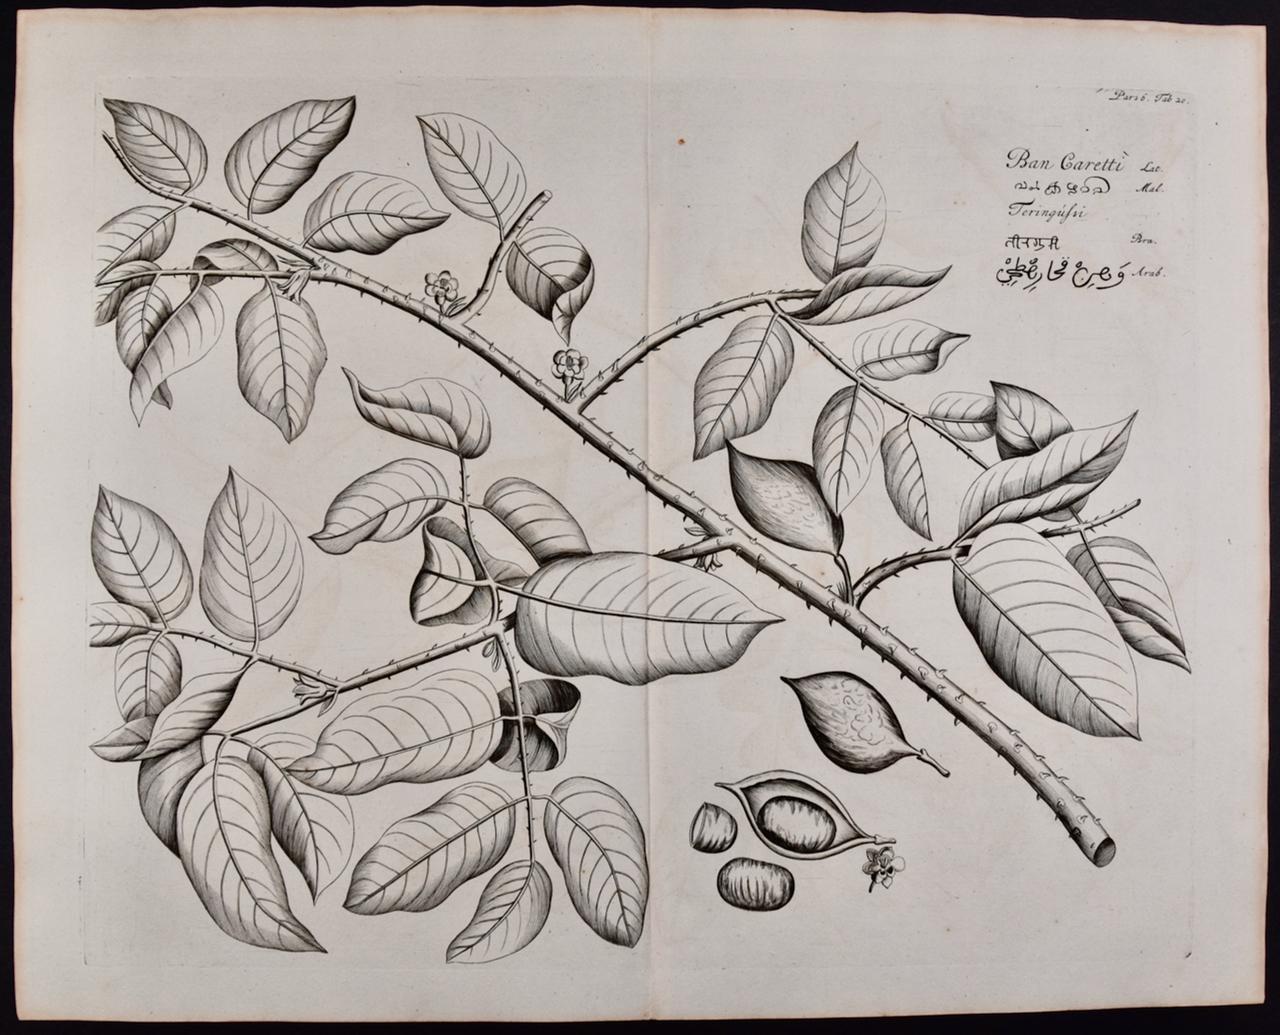 « Ban Caretti », plante à noix de fièvre « Ban Caretti » : gravure du XVIIe siècle de Hendrik van Rheede - Print de Hendrik Adriaan van Rheede tot Drakenstein